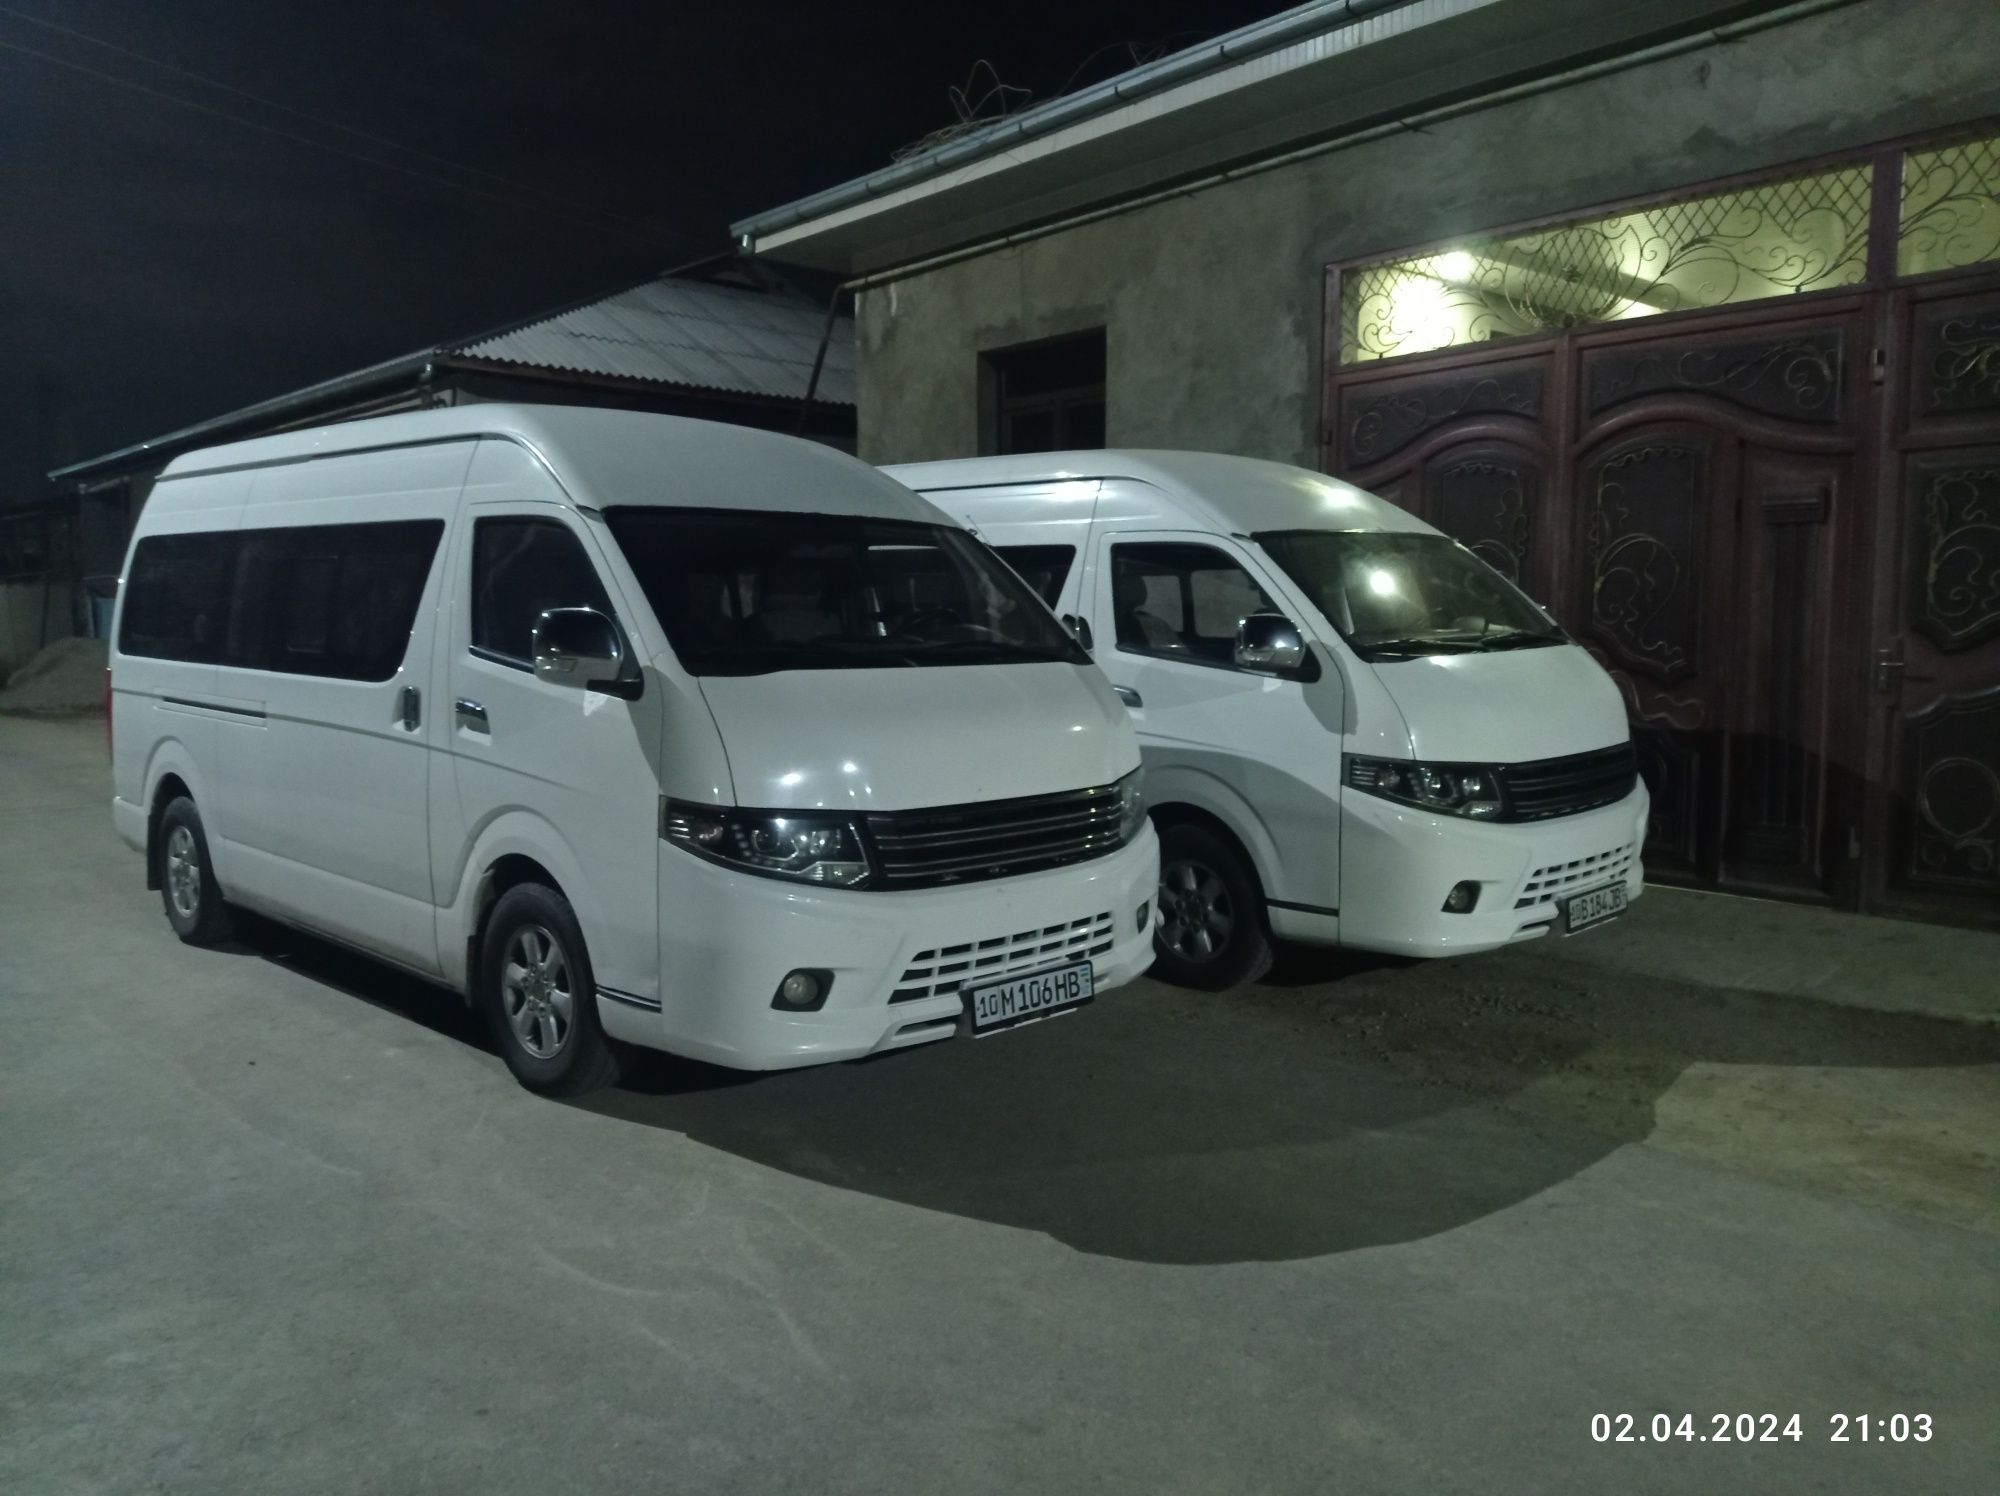 На заказ  Микроавтобус Uzbekistan BO'YLAB SAYOHAT